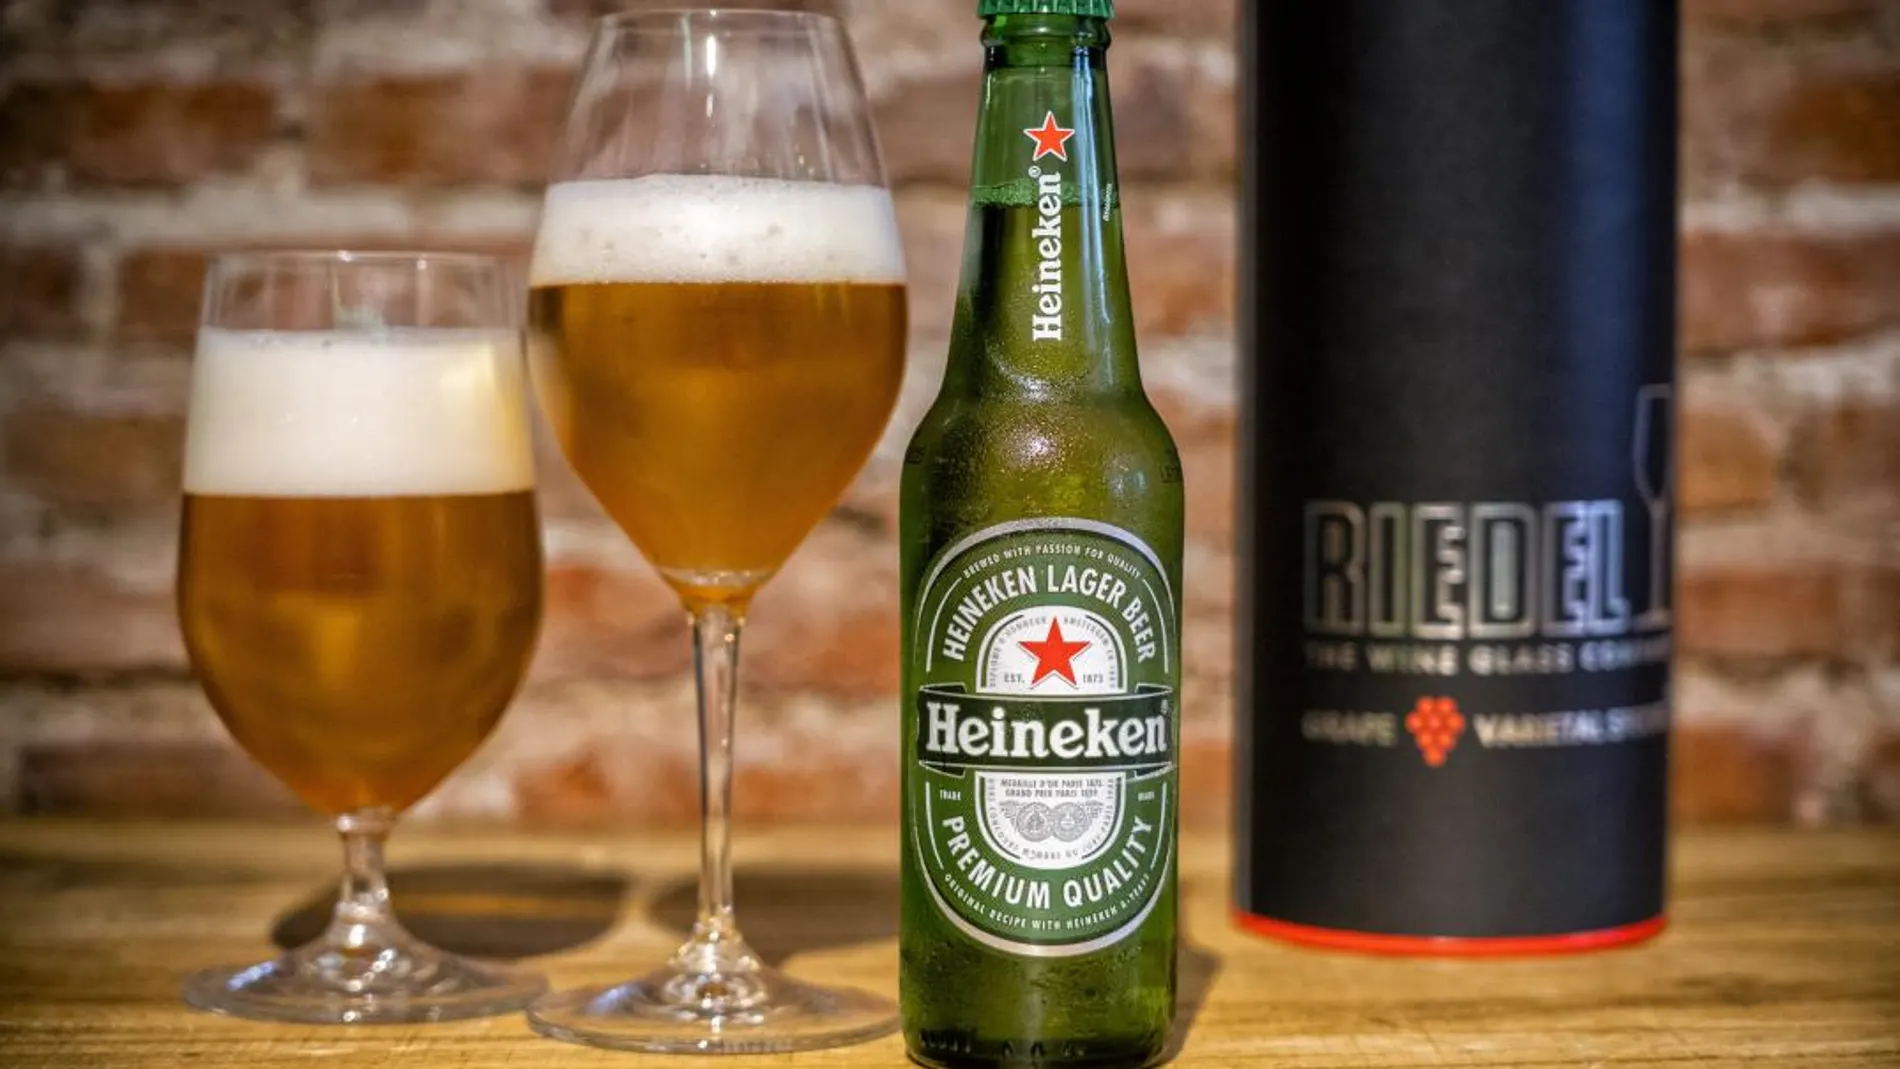 La cerveza Heineken en copas Riedel